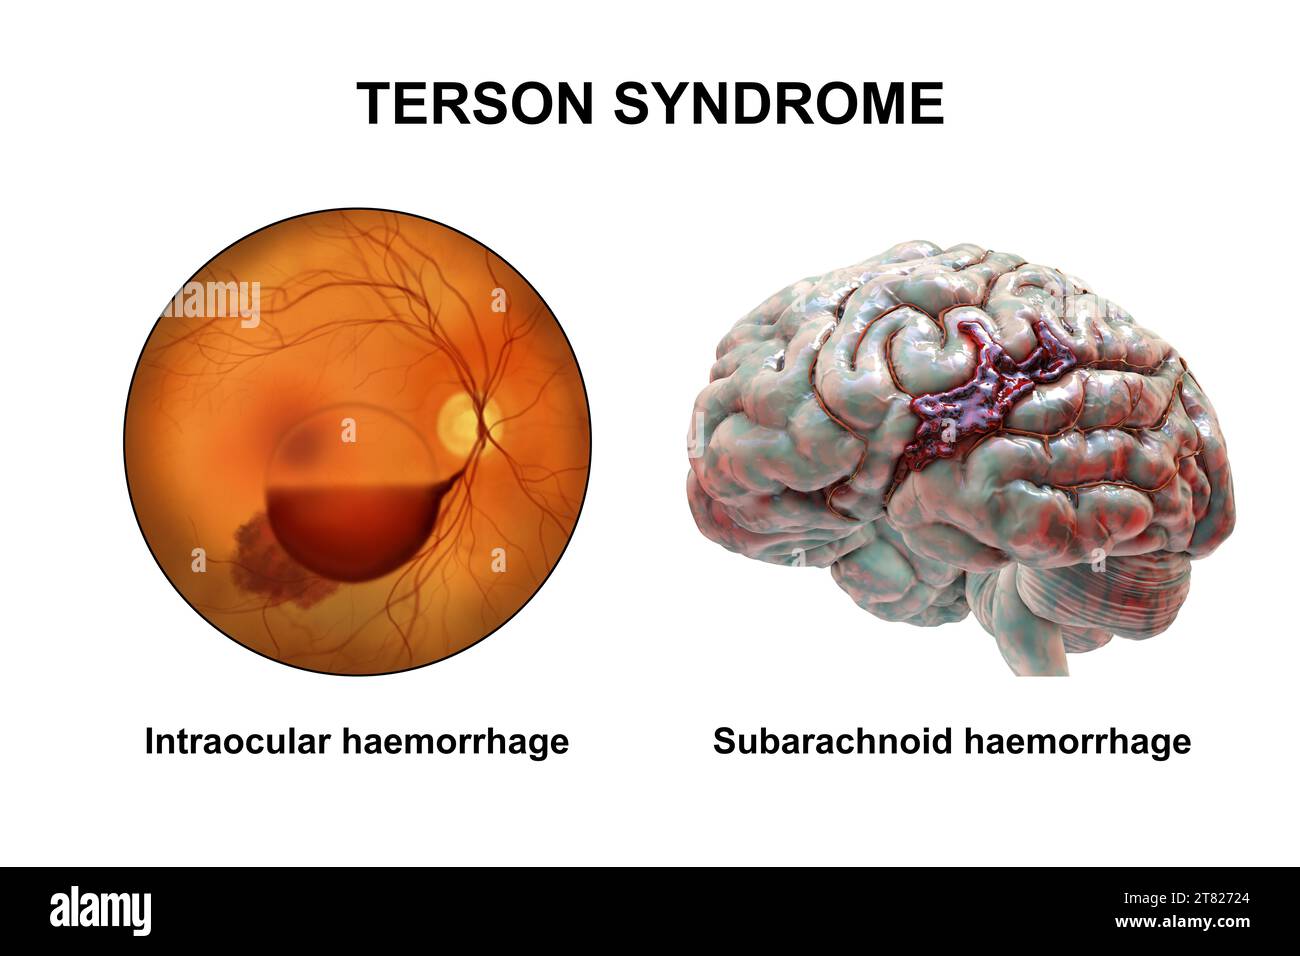 Terson syndrome, illustration Stock Photo